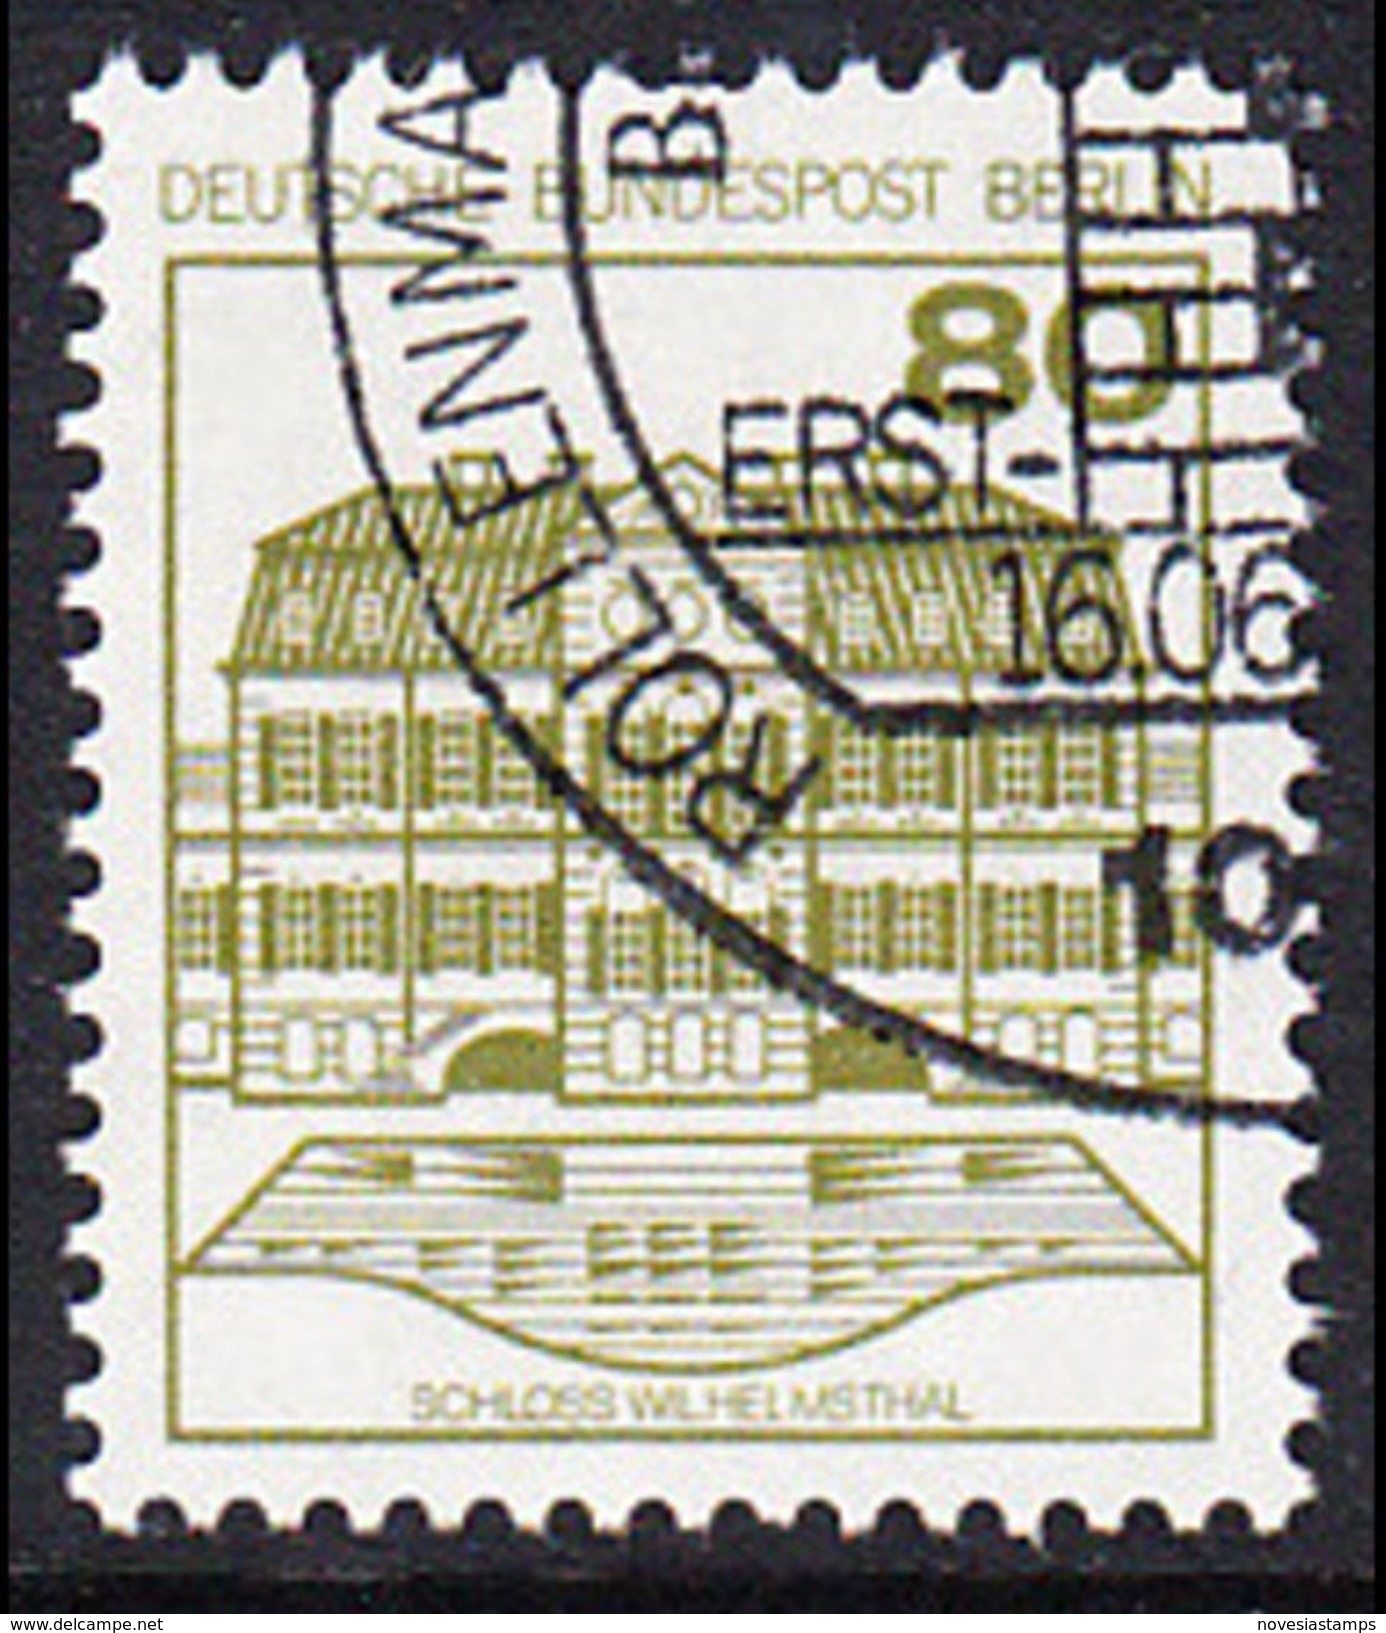 !b! BERLIN 1982 Mi. 674 USED SINGLE (c) - Castles & Chateaux: Chateau Wilhelmsthal - Gebraucht